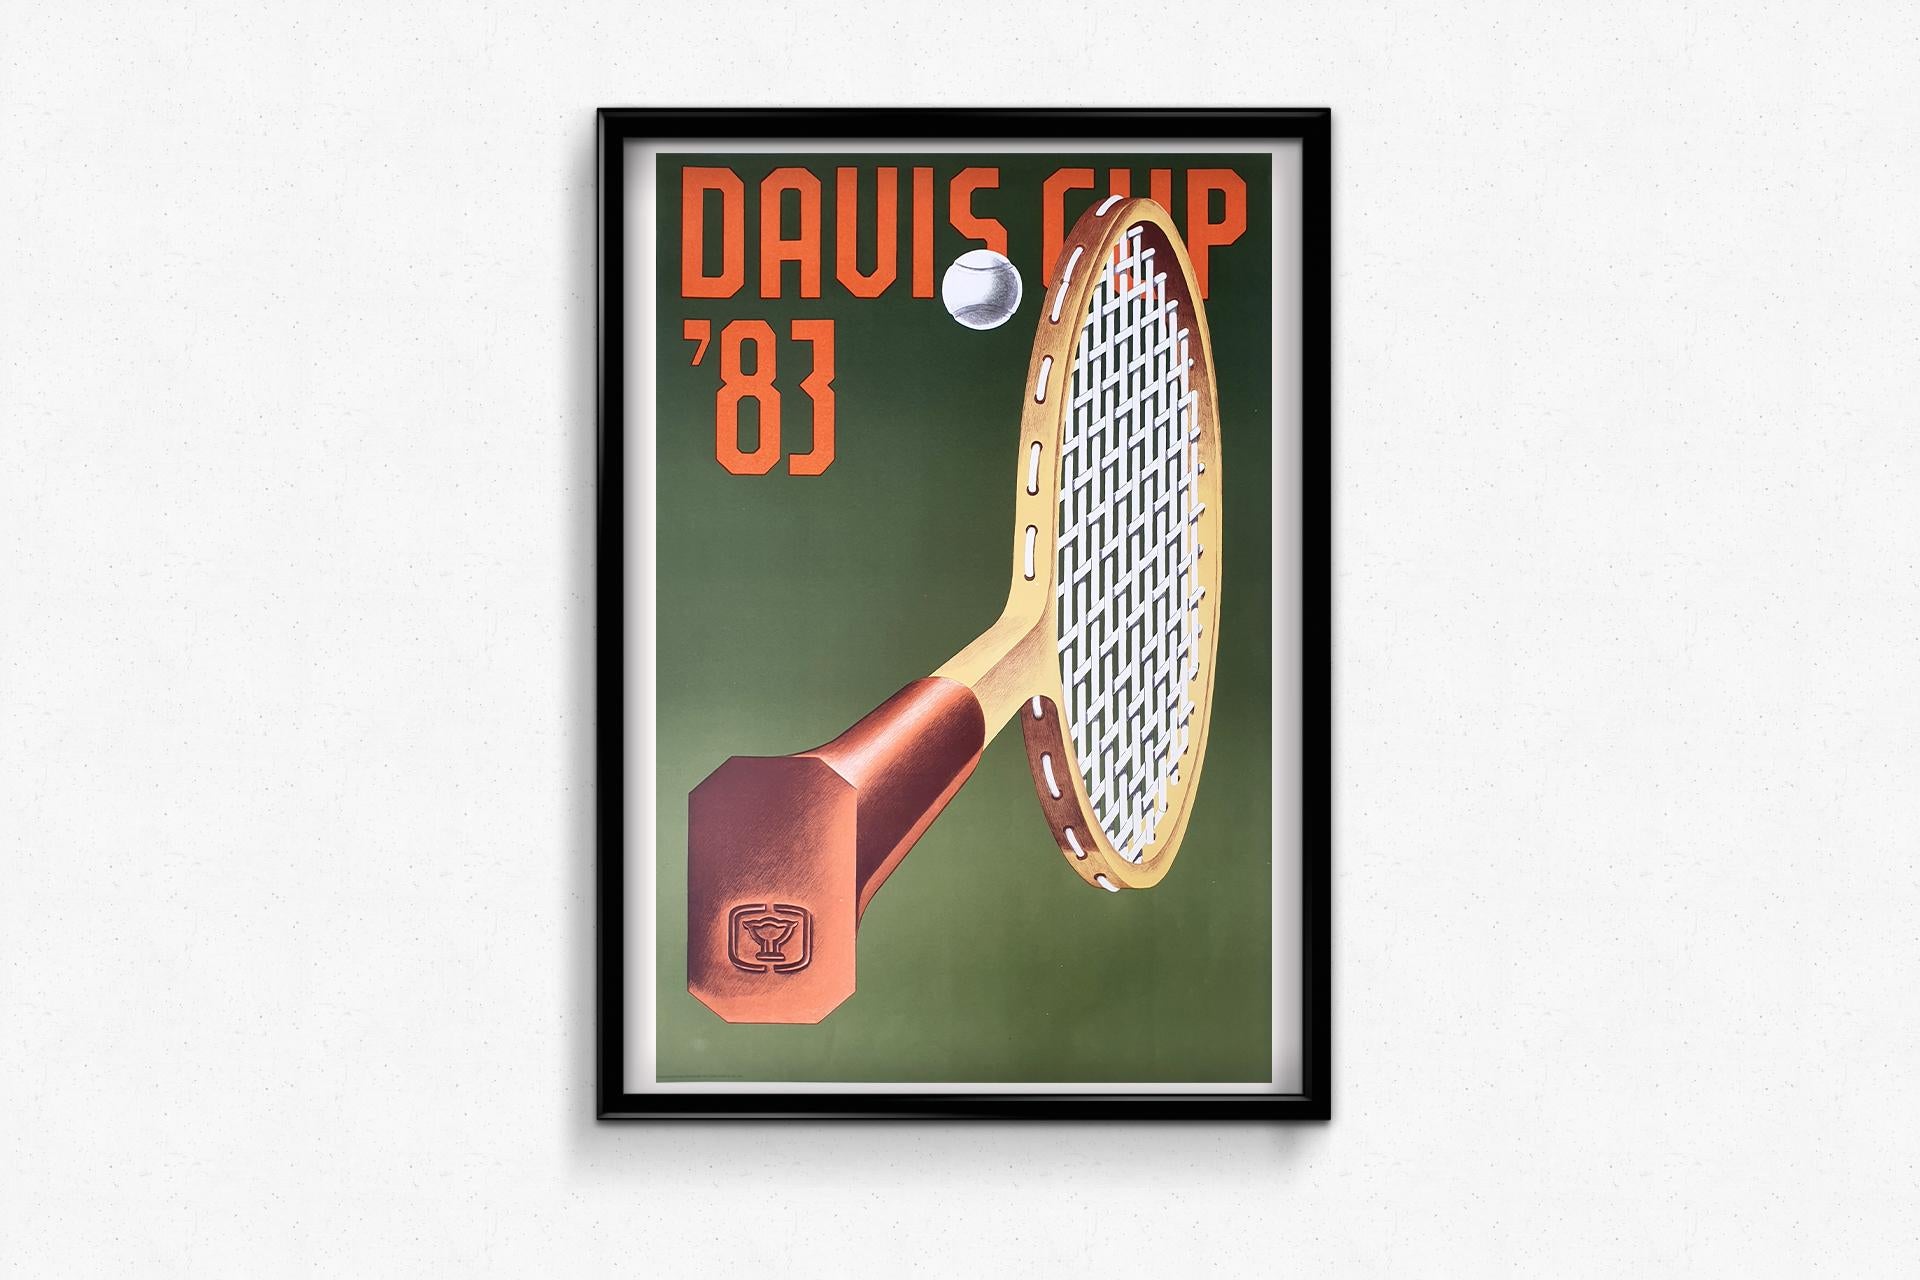 Original poster by Konrad Klapheck in 1983 to promote the Davis Cup Tennis For Sale 2